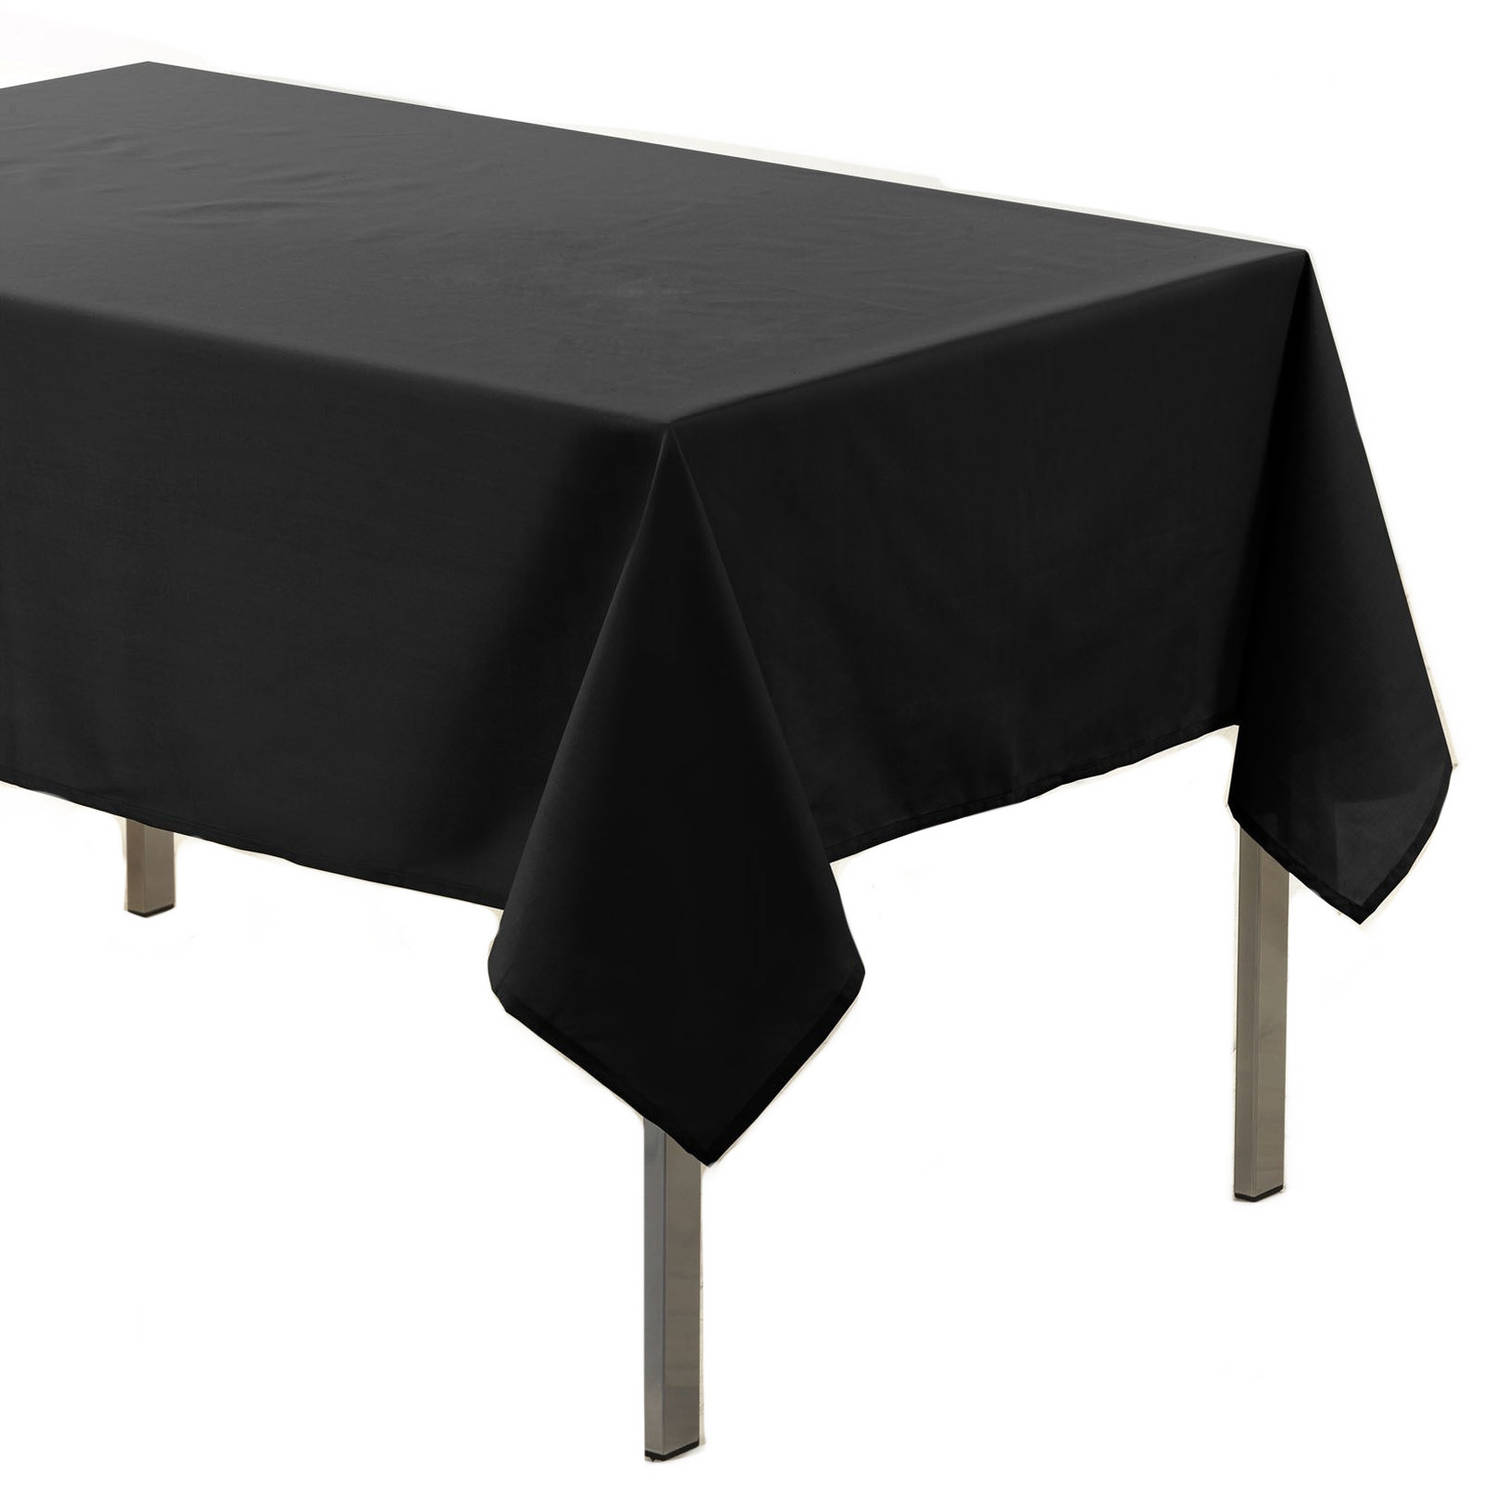 restjes Lodge Hoorzitting Tafelkleed/tafellaken zwart 140 x 250 cm textiel/stof - Feesttafelkleden |  Blokker